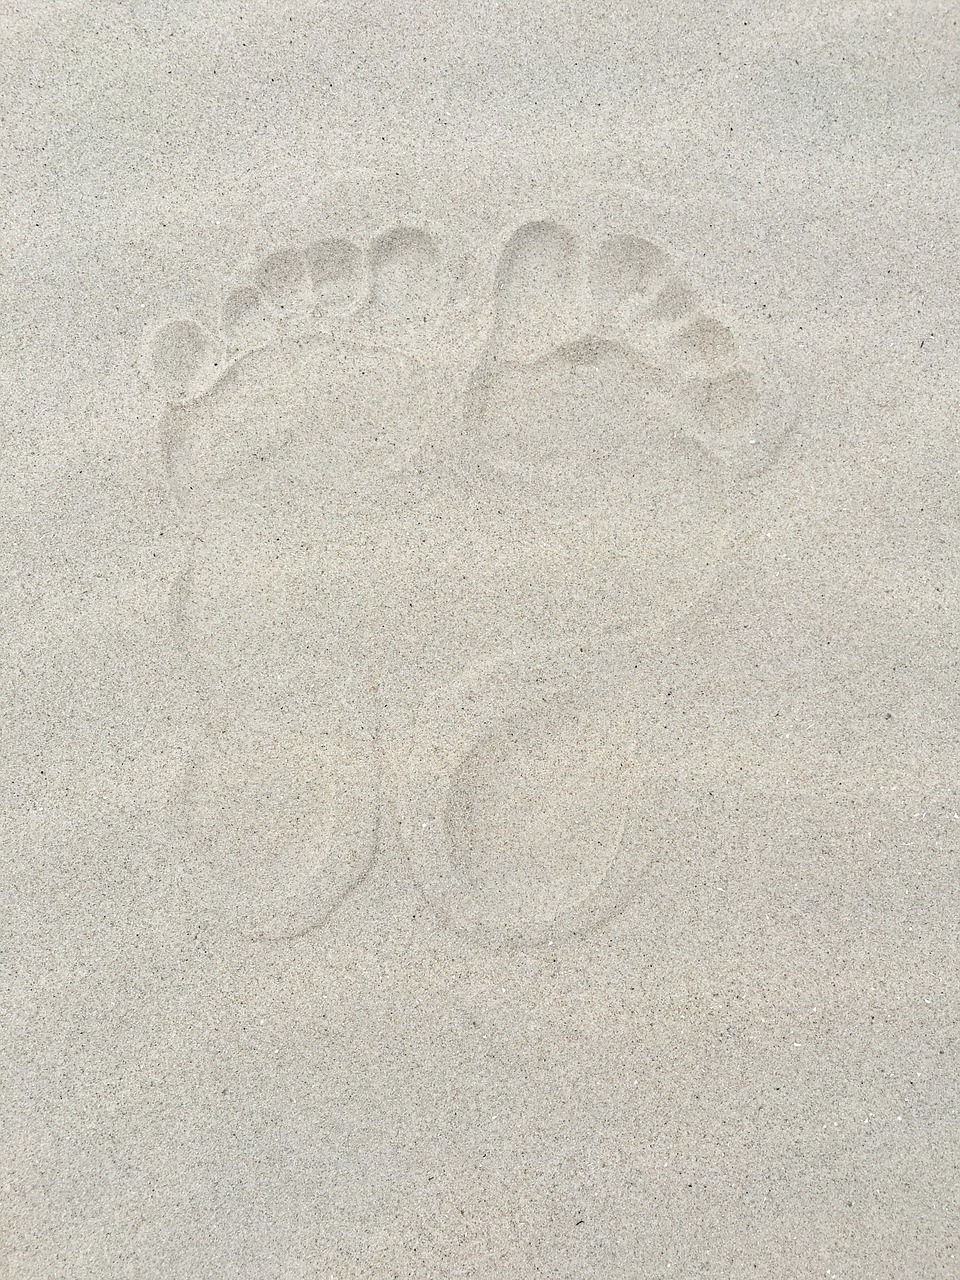 sand footprints prints free photo